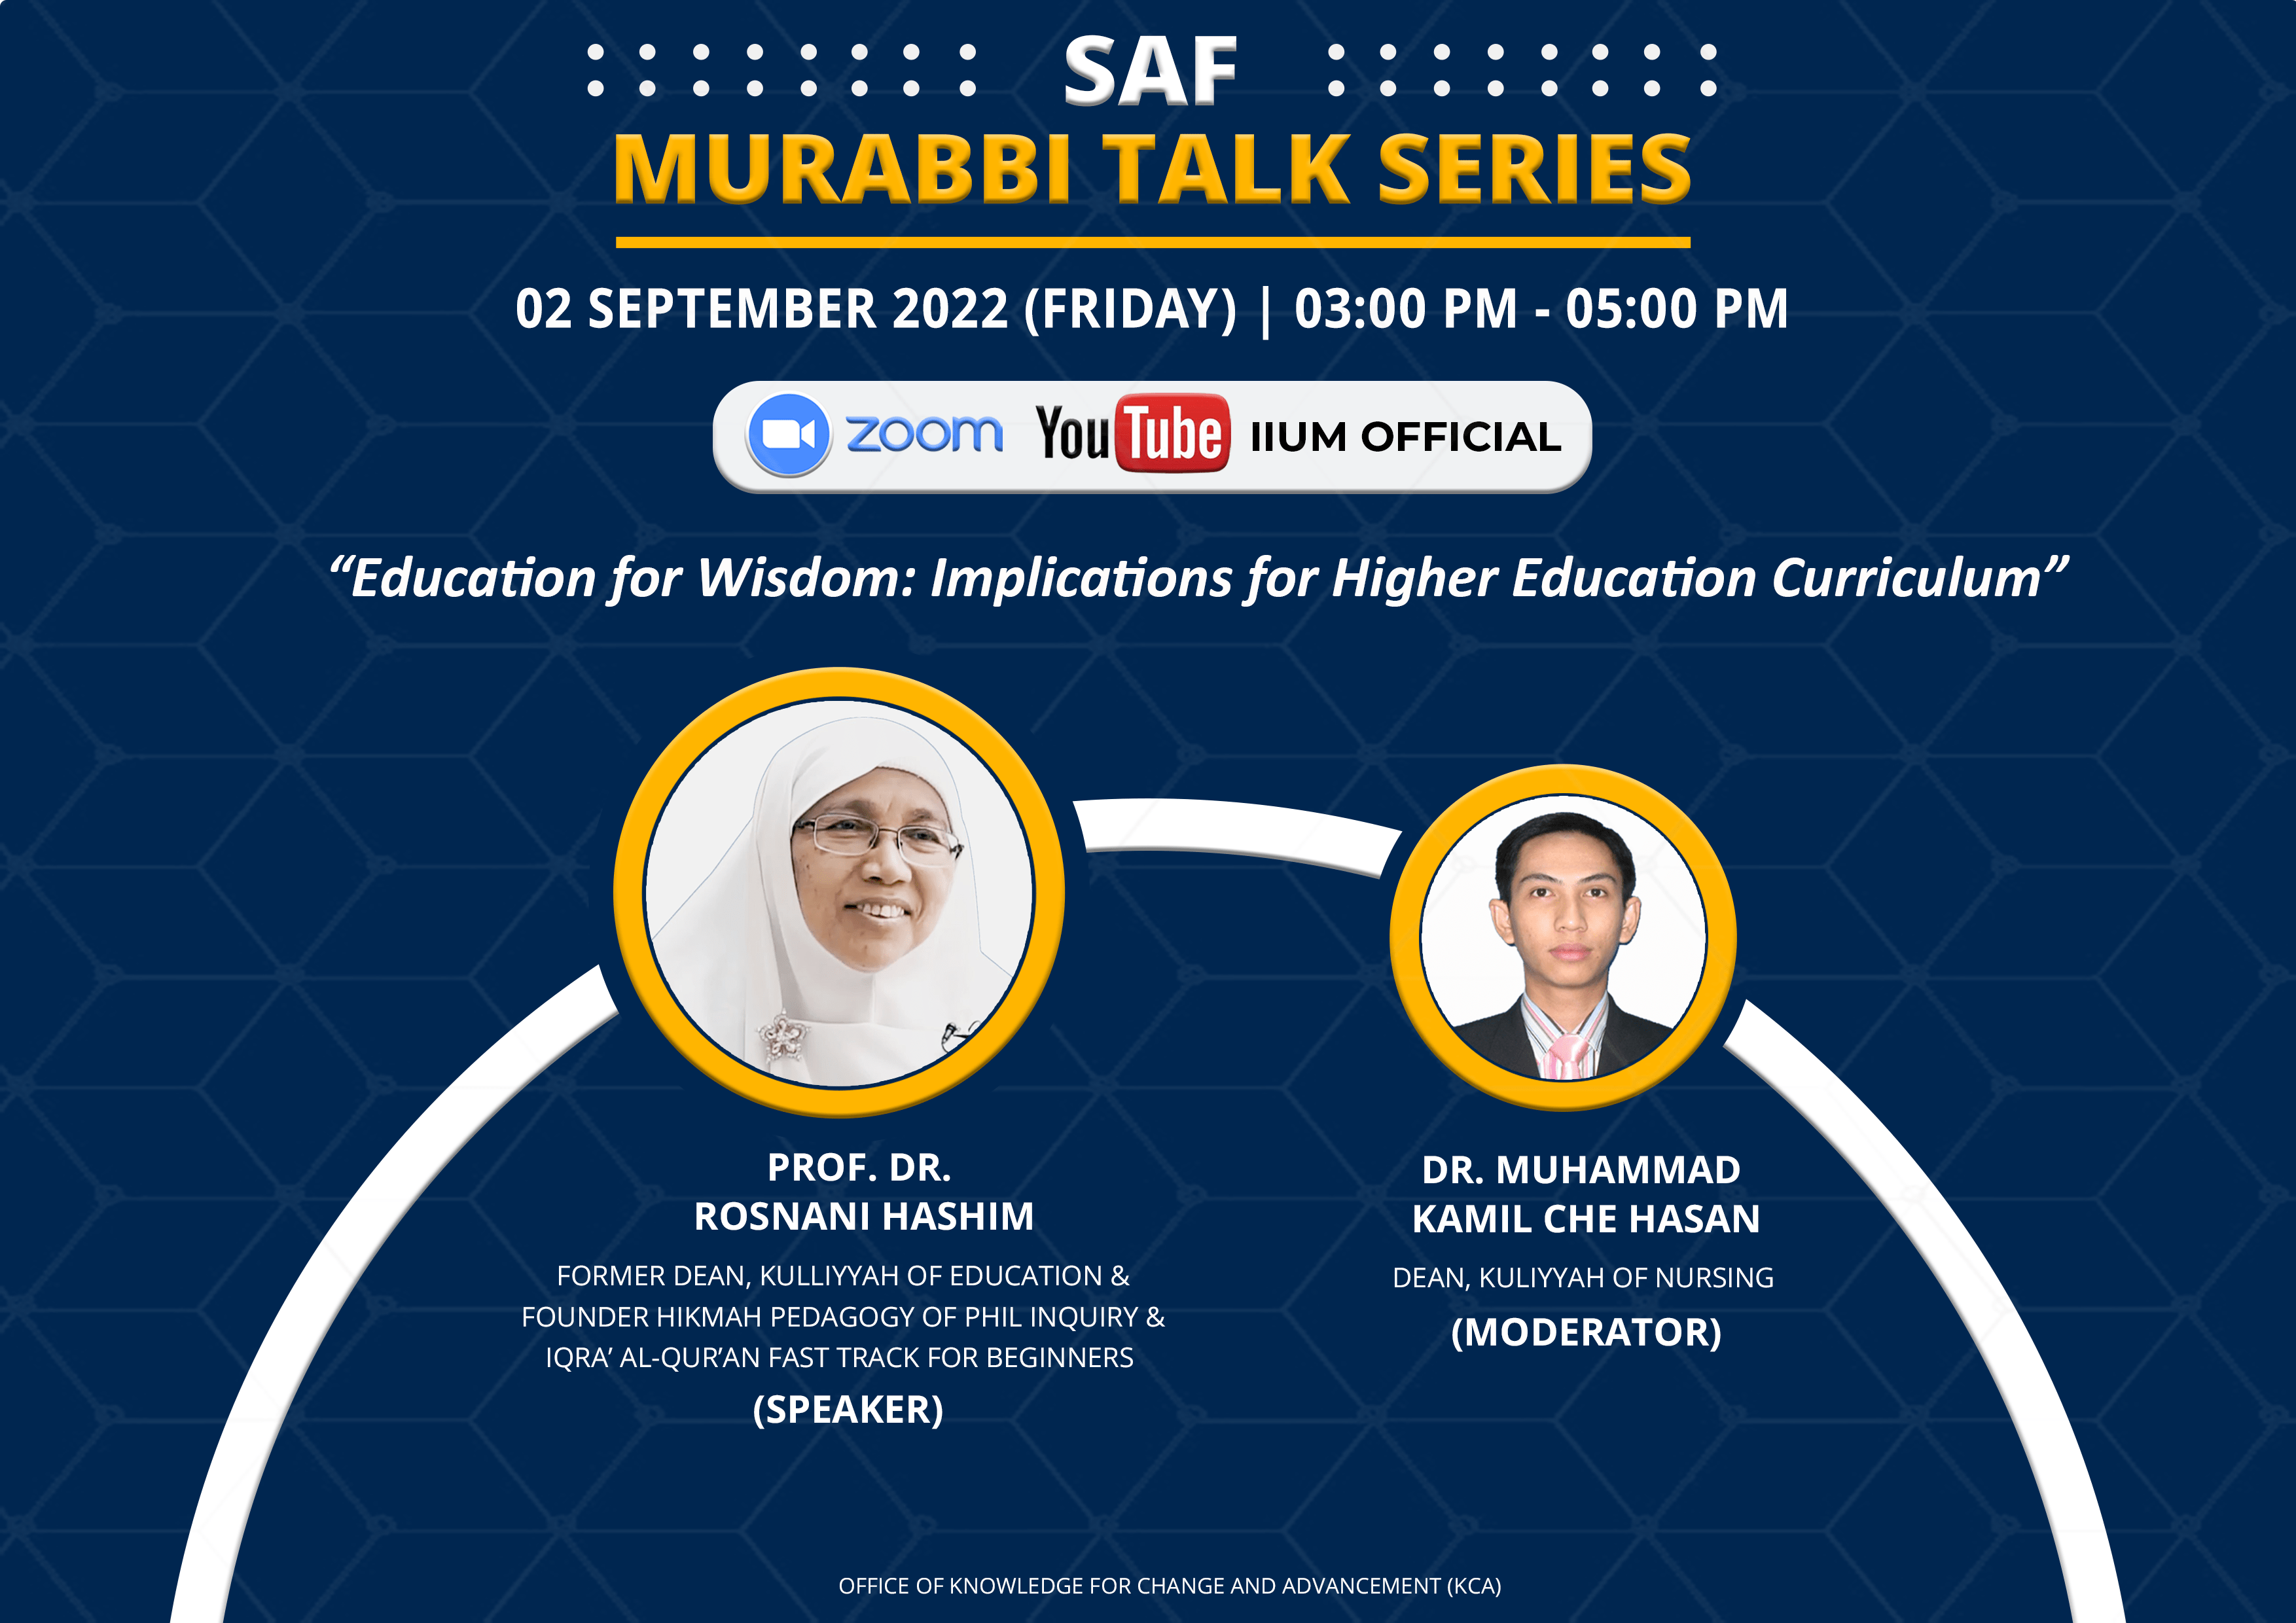 SAF Murabbi Talk Series with Prof. Dr. Rosnani Hashim